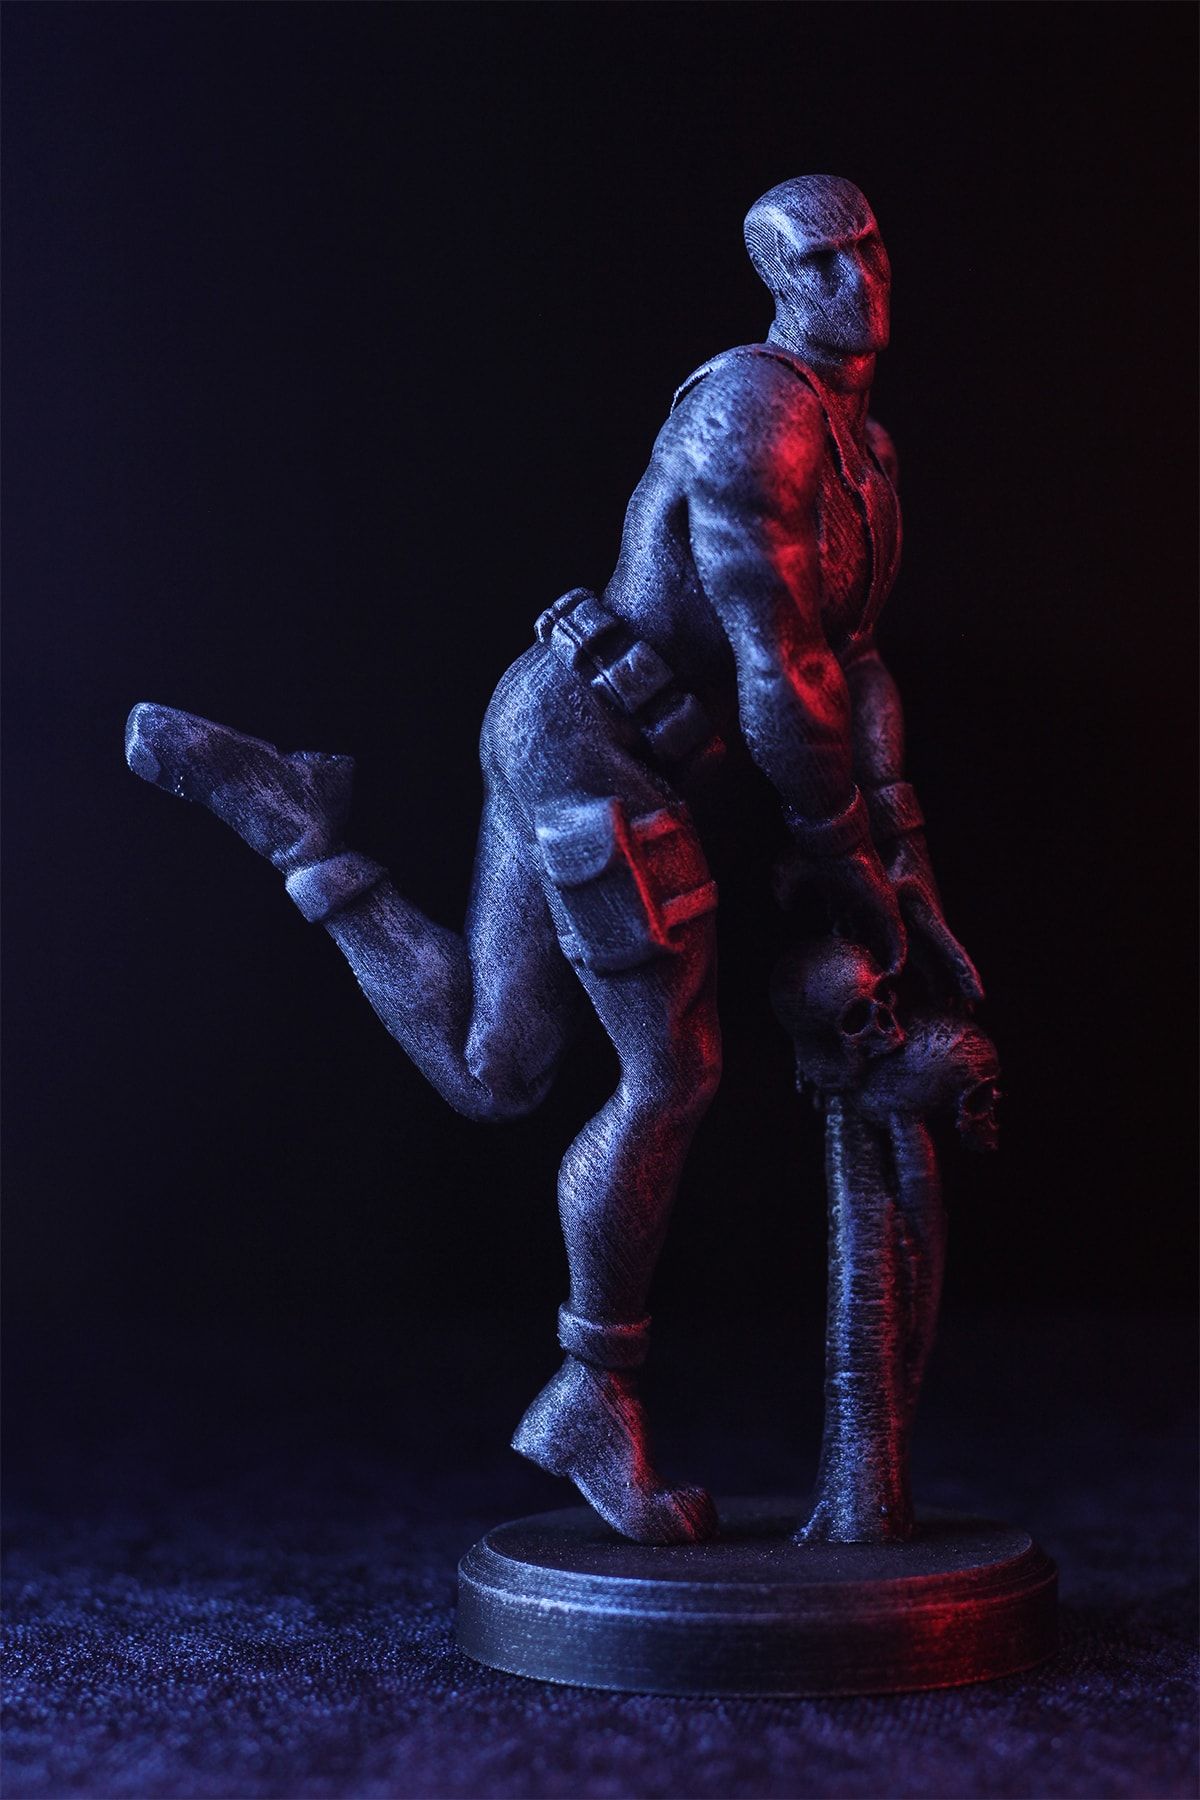 GÜRCÜ 3D Deadpool Figür/heykel 18cm - Marvel Avengers